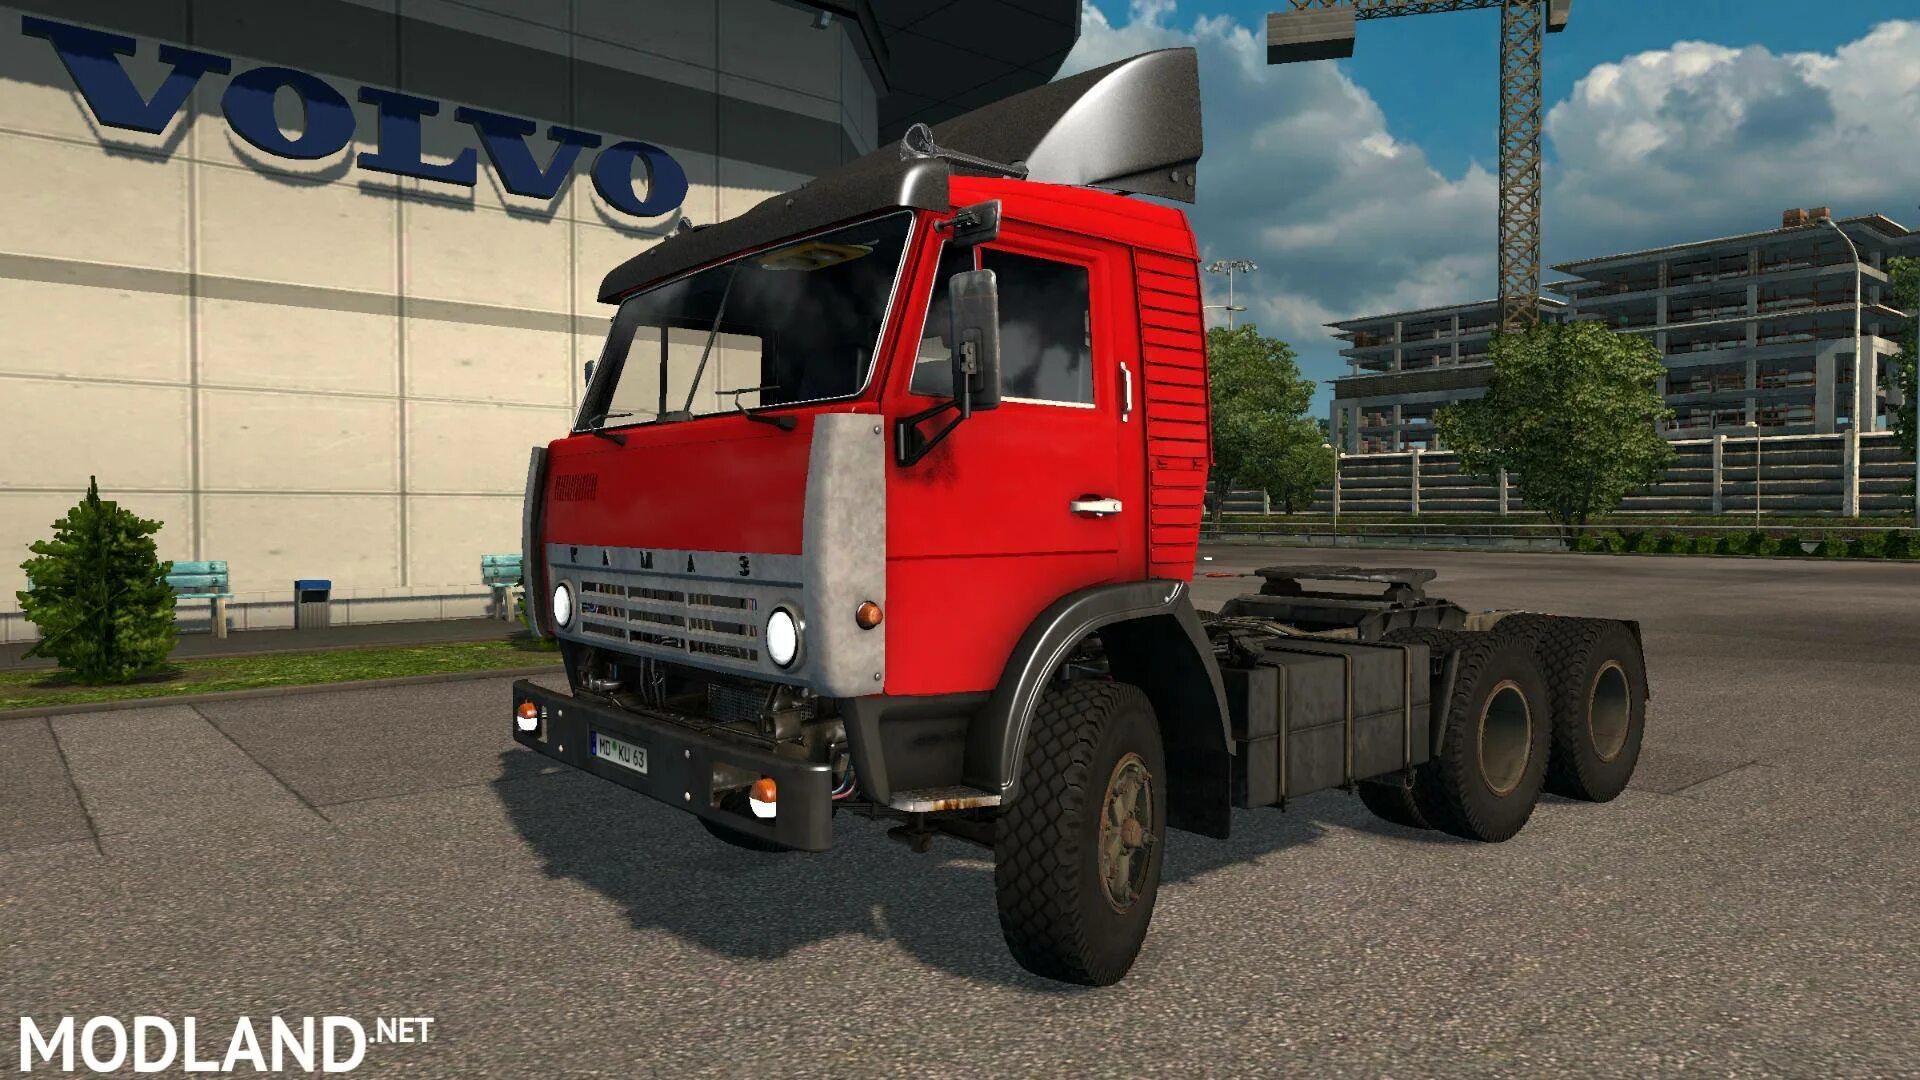 Етс 1 43. Euro Truck Simulator 2 КАМАЗ 5410. КАМАЗ 5410 для етс. КАМАЗ-5410 [hq]. КАМАЗ 5410 тягач.